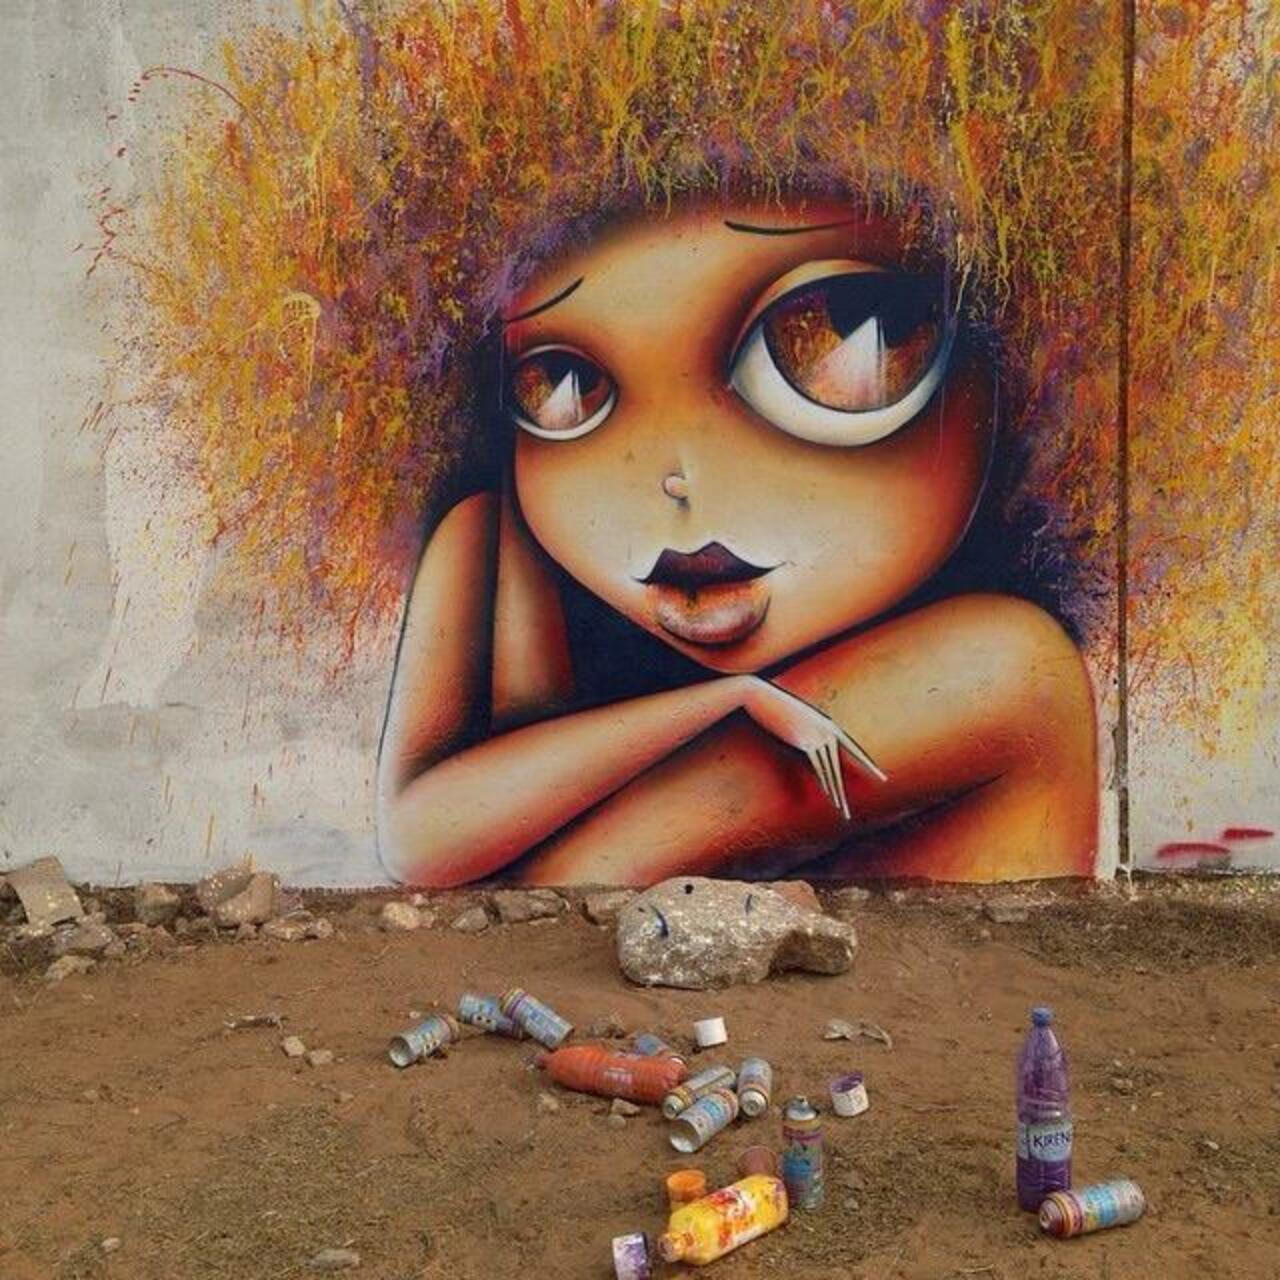 New Street Art by Vinie in Dakar, Senegal  

#art #arte #graffiti #streetart http://t.co/GPyMMydvAL